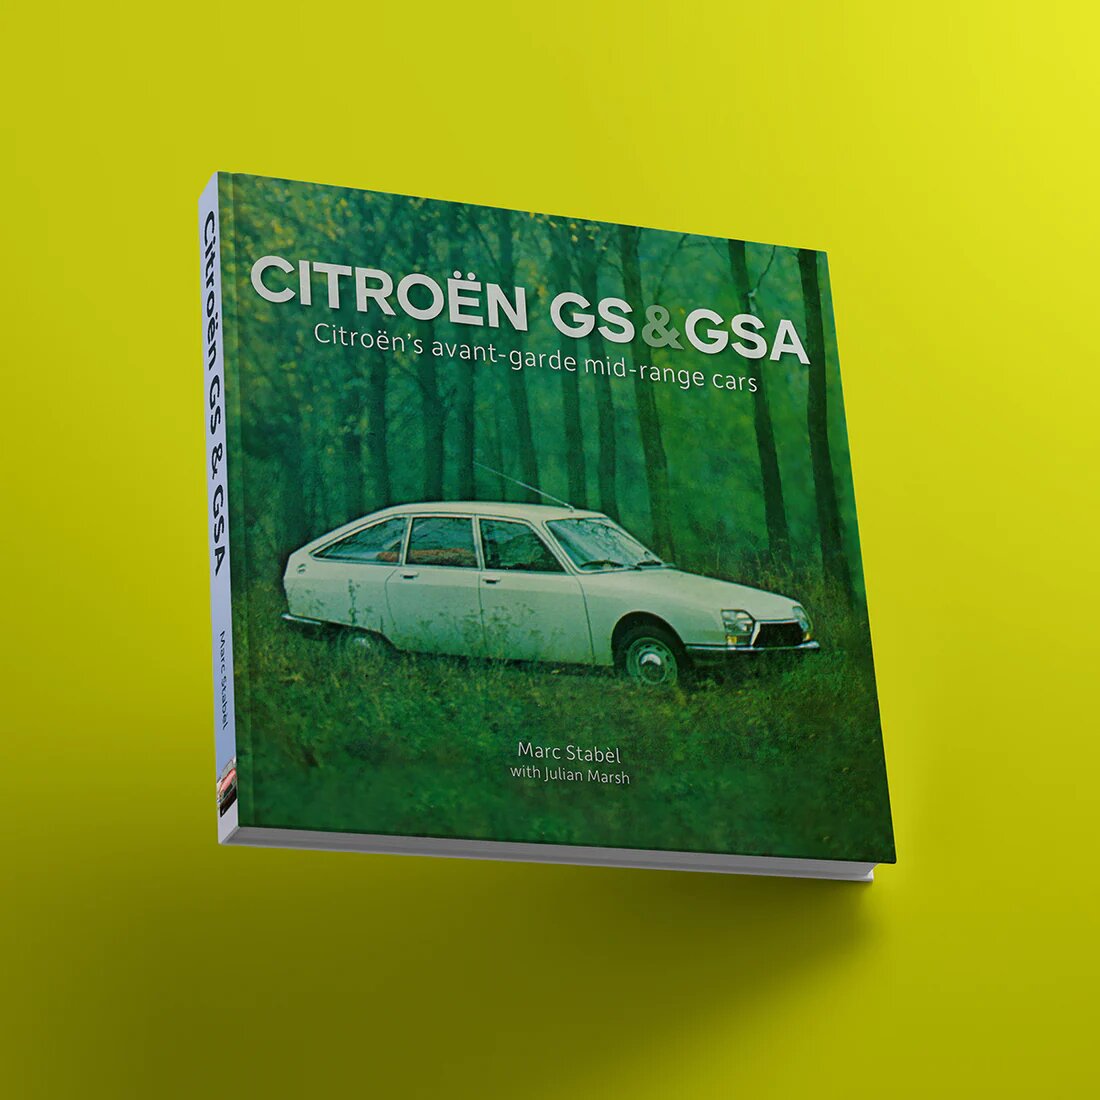 Citroën GS & GSA - Citroën’s avant-garde mid-range cars (GB)